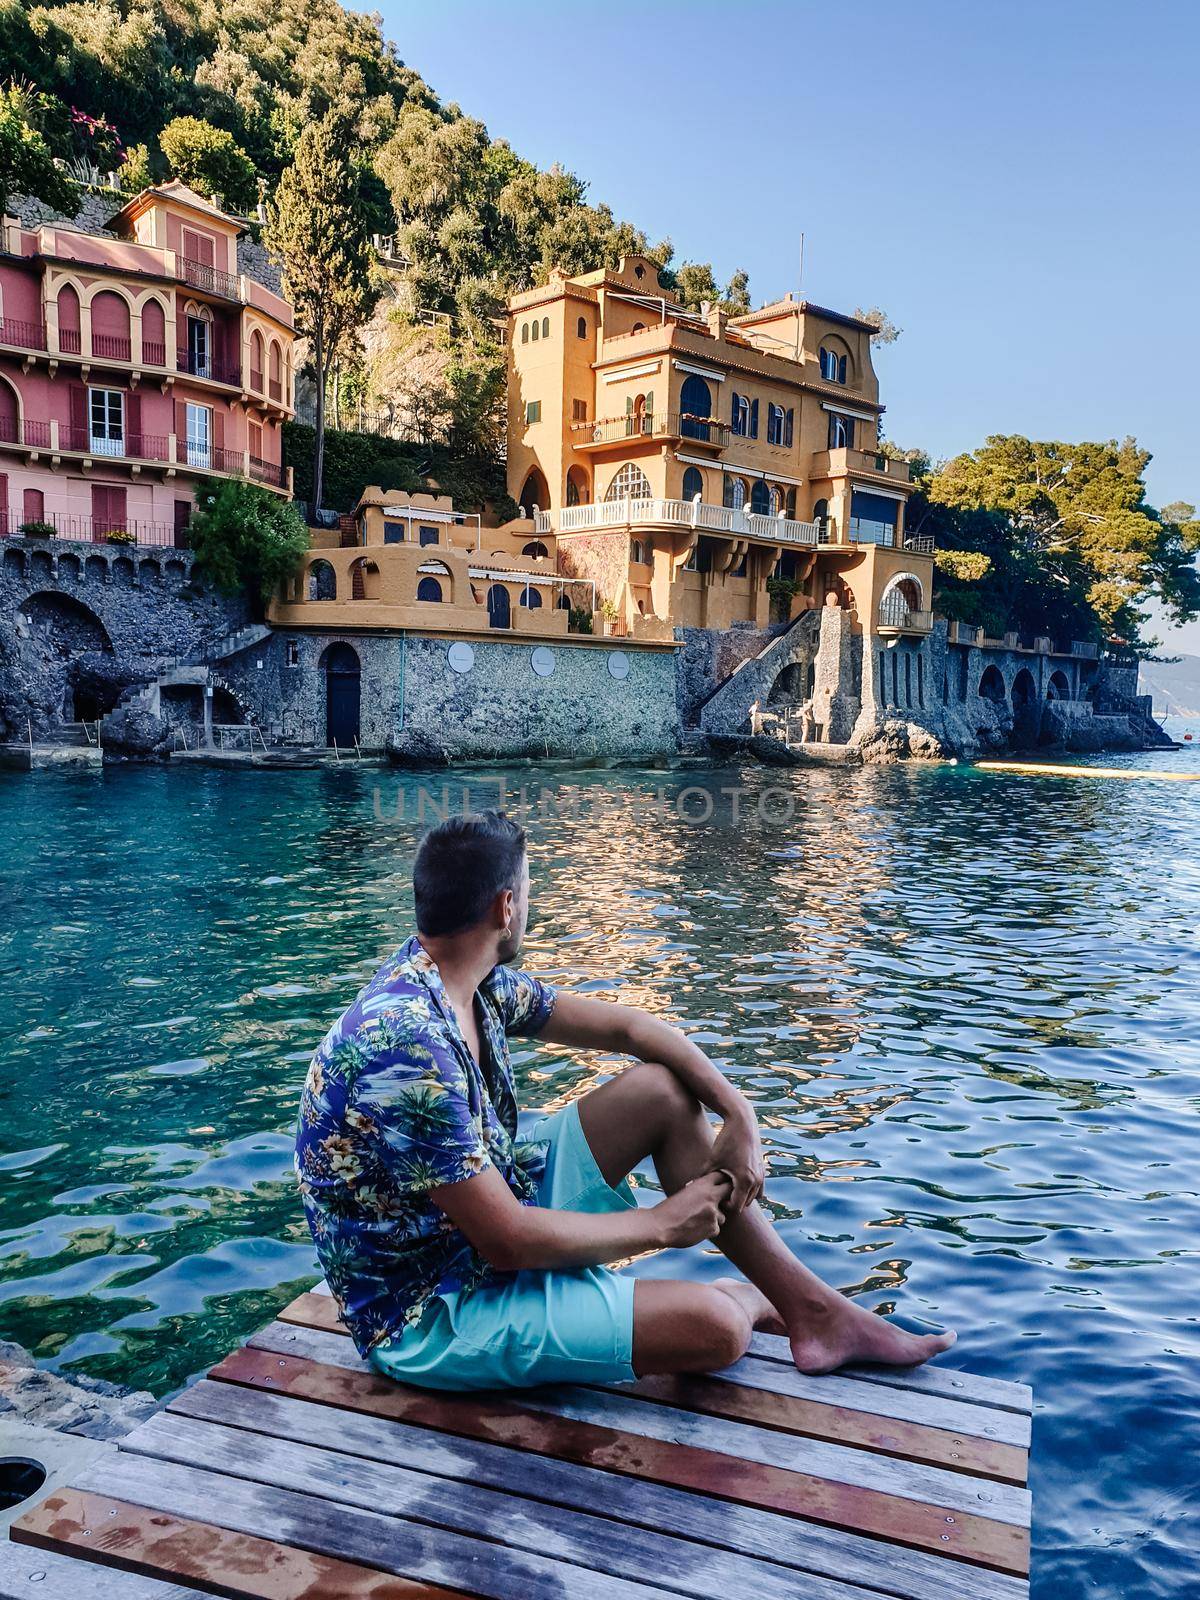 Portofino Liguria Italy, Beautiful bay with colorful houses in Portofino, Liguria, Italy by fokkebok